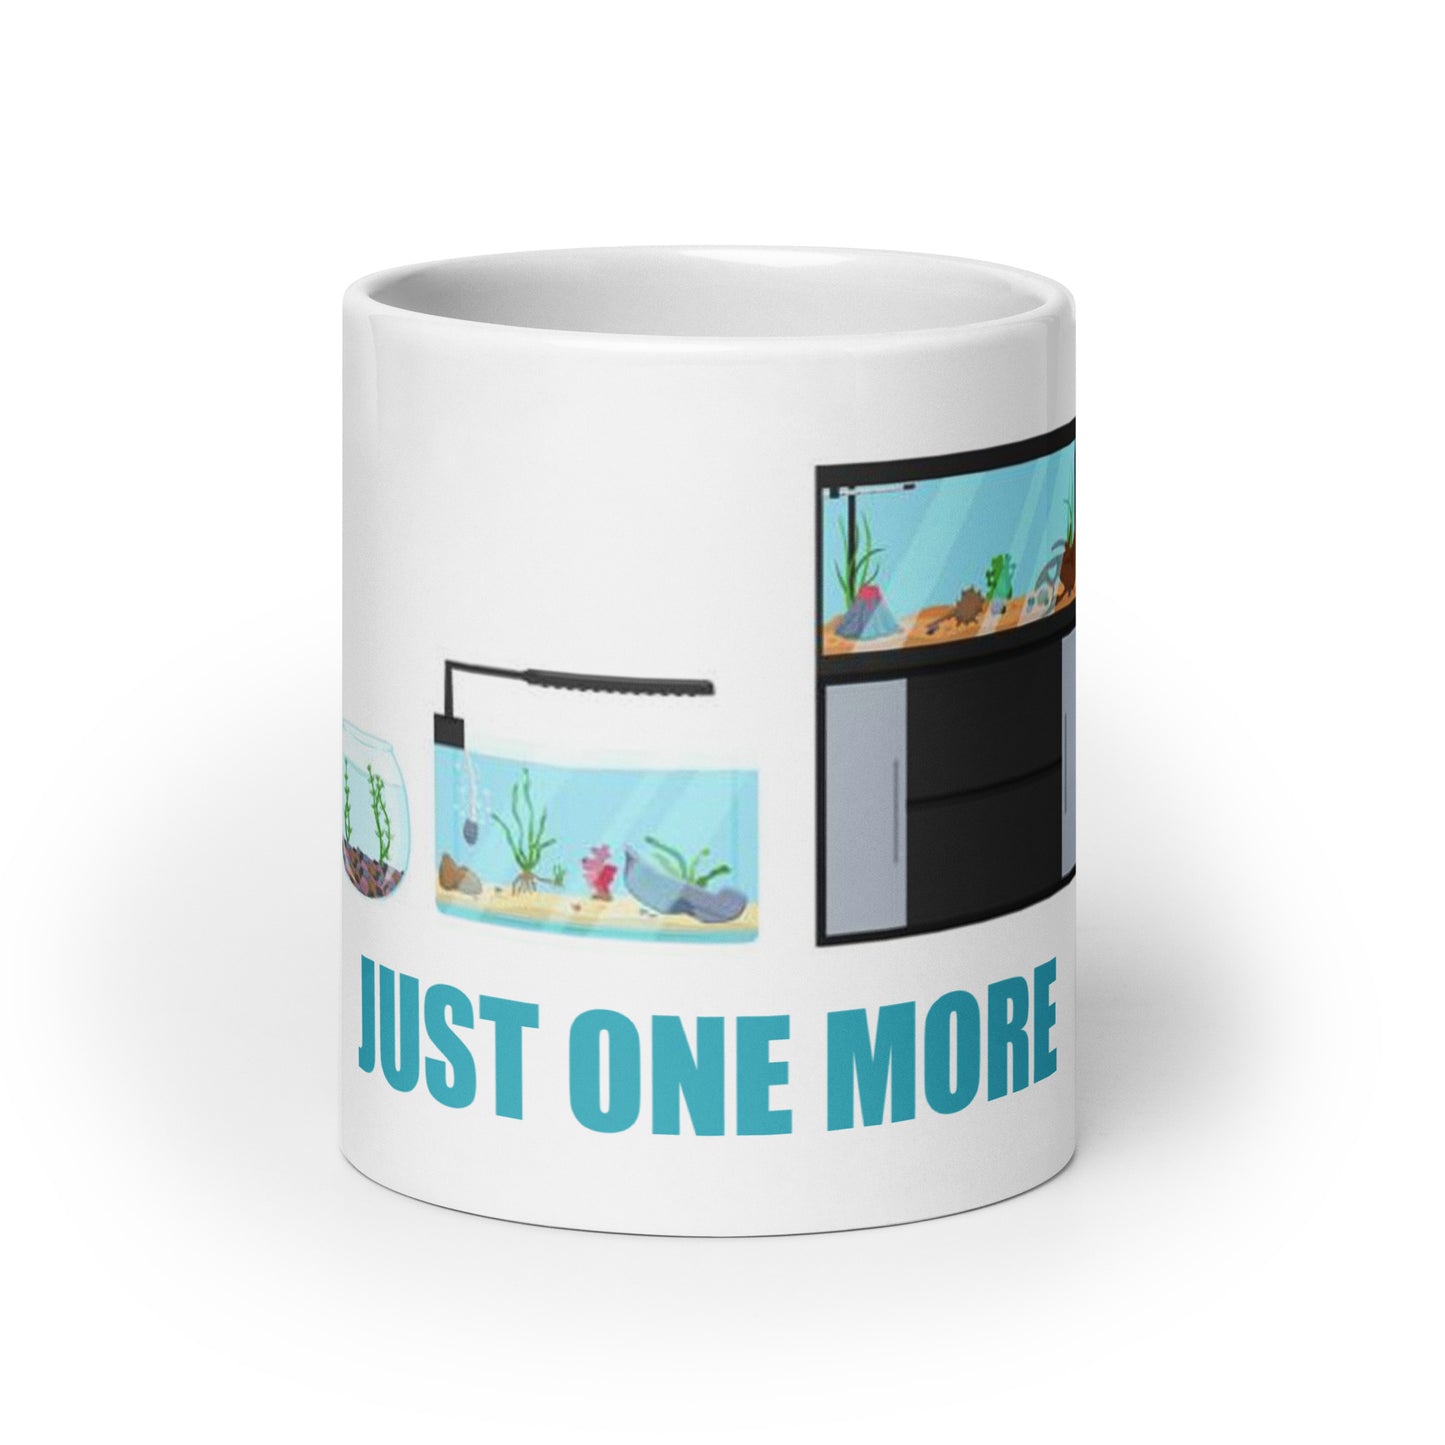 Just one more TANK mug!